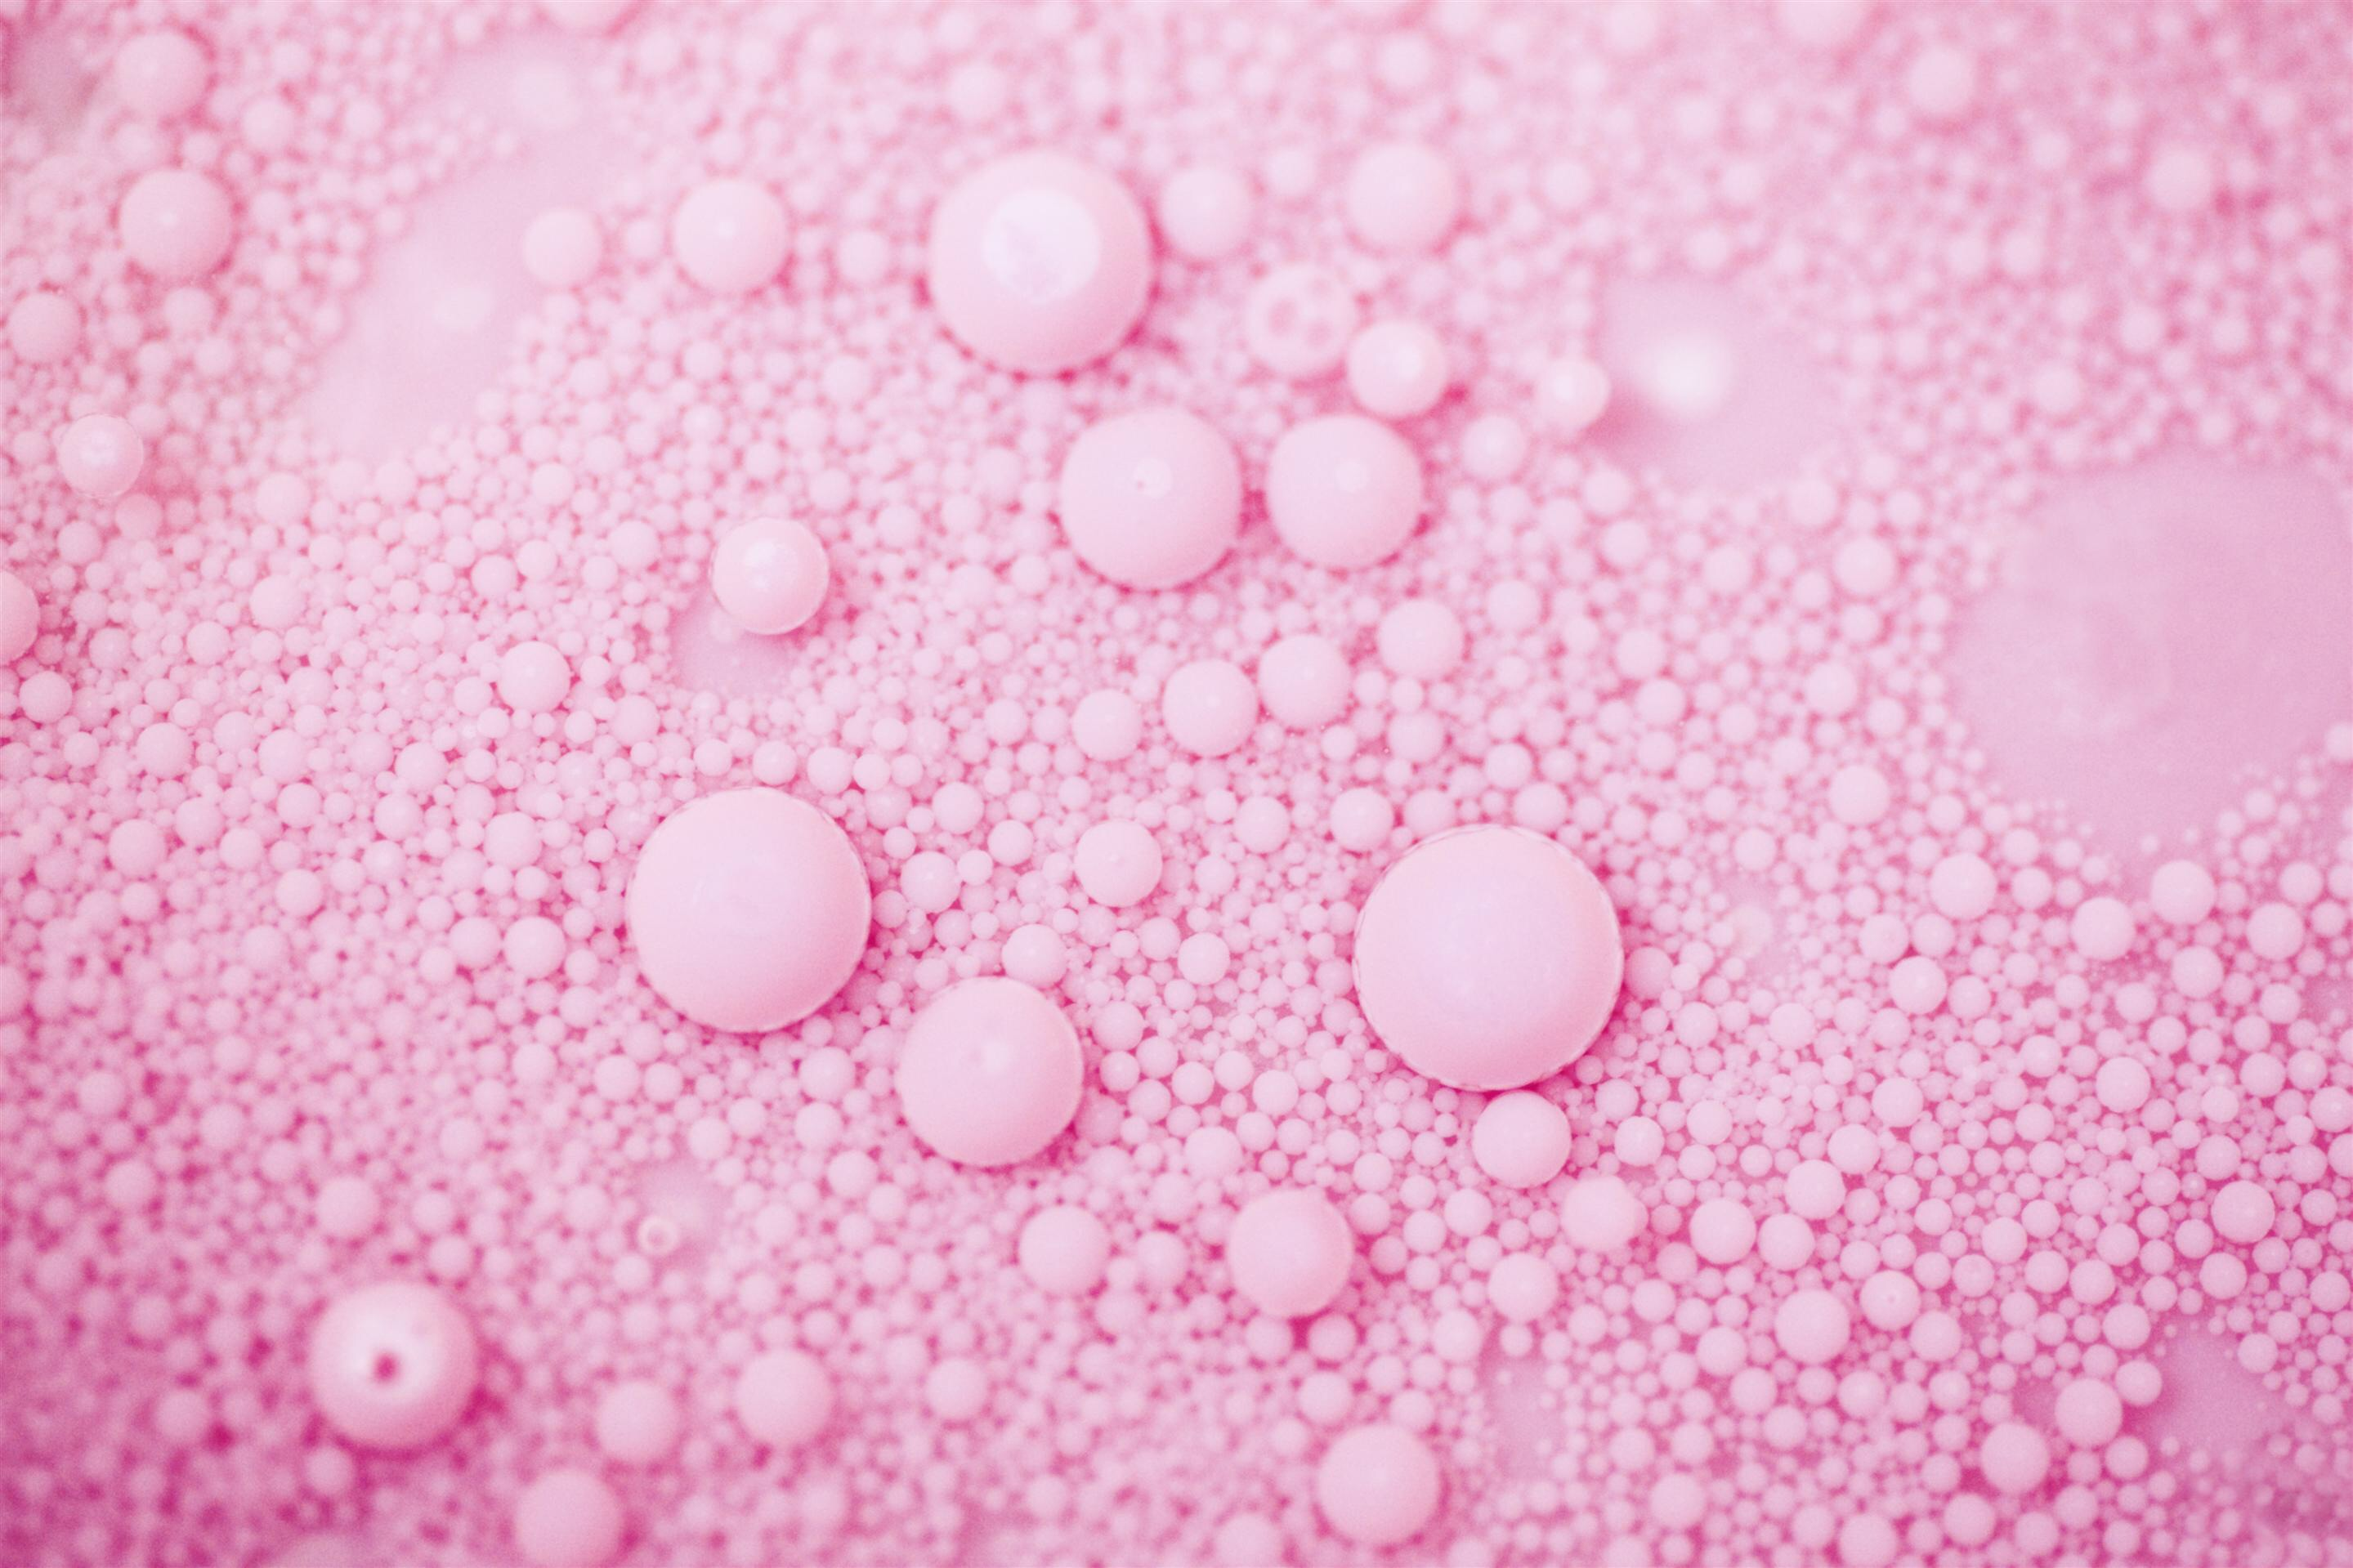 Розовая пузырька. Розовые пузырьки. Розовые пузыри фон. Розовый фон с пузырьками. Мыльные пузыри на розовом фоне.